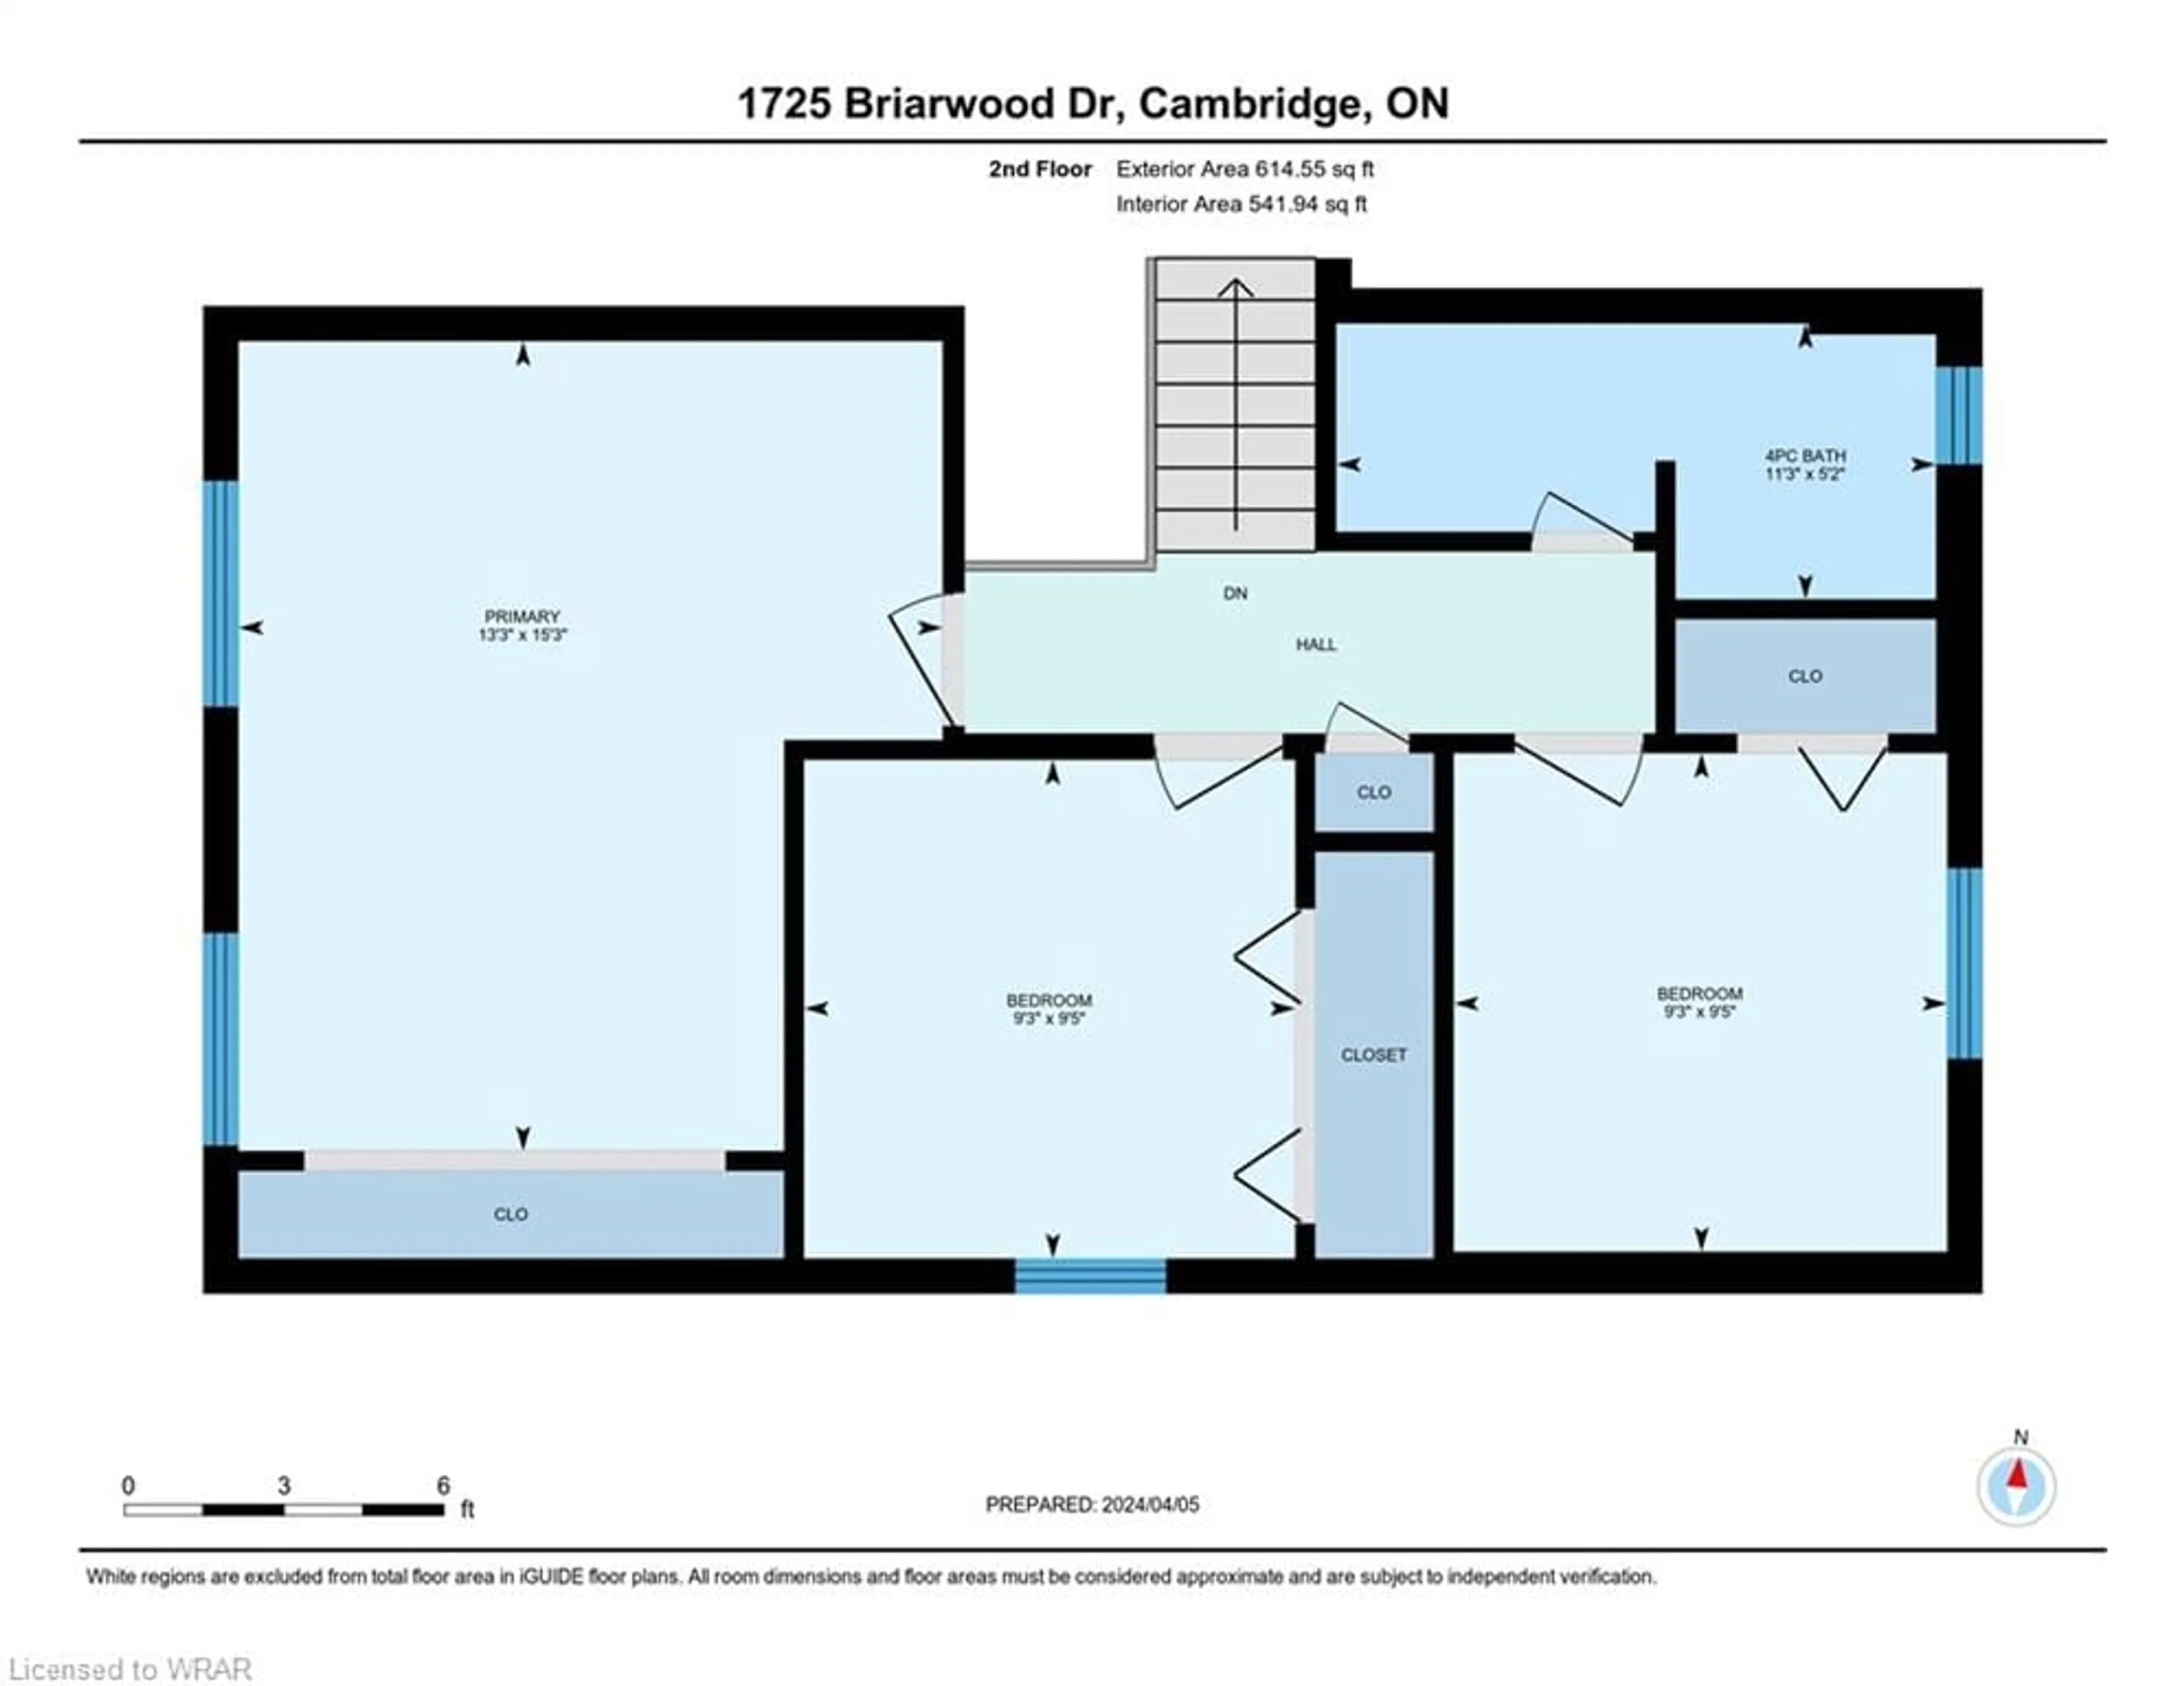 Floor plan for 1725 Briarwood Dr, Cambridge Ontario N3H 5A6